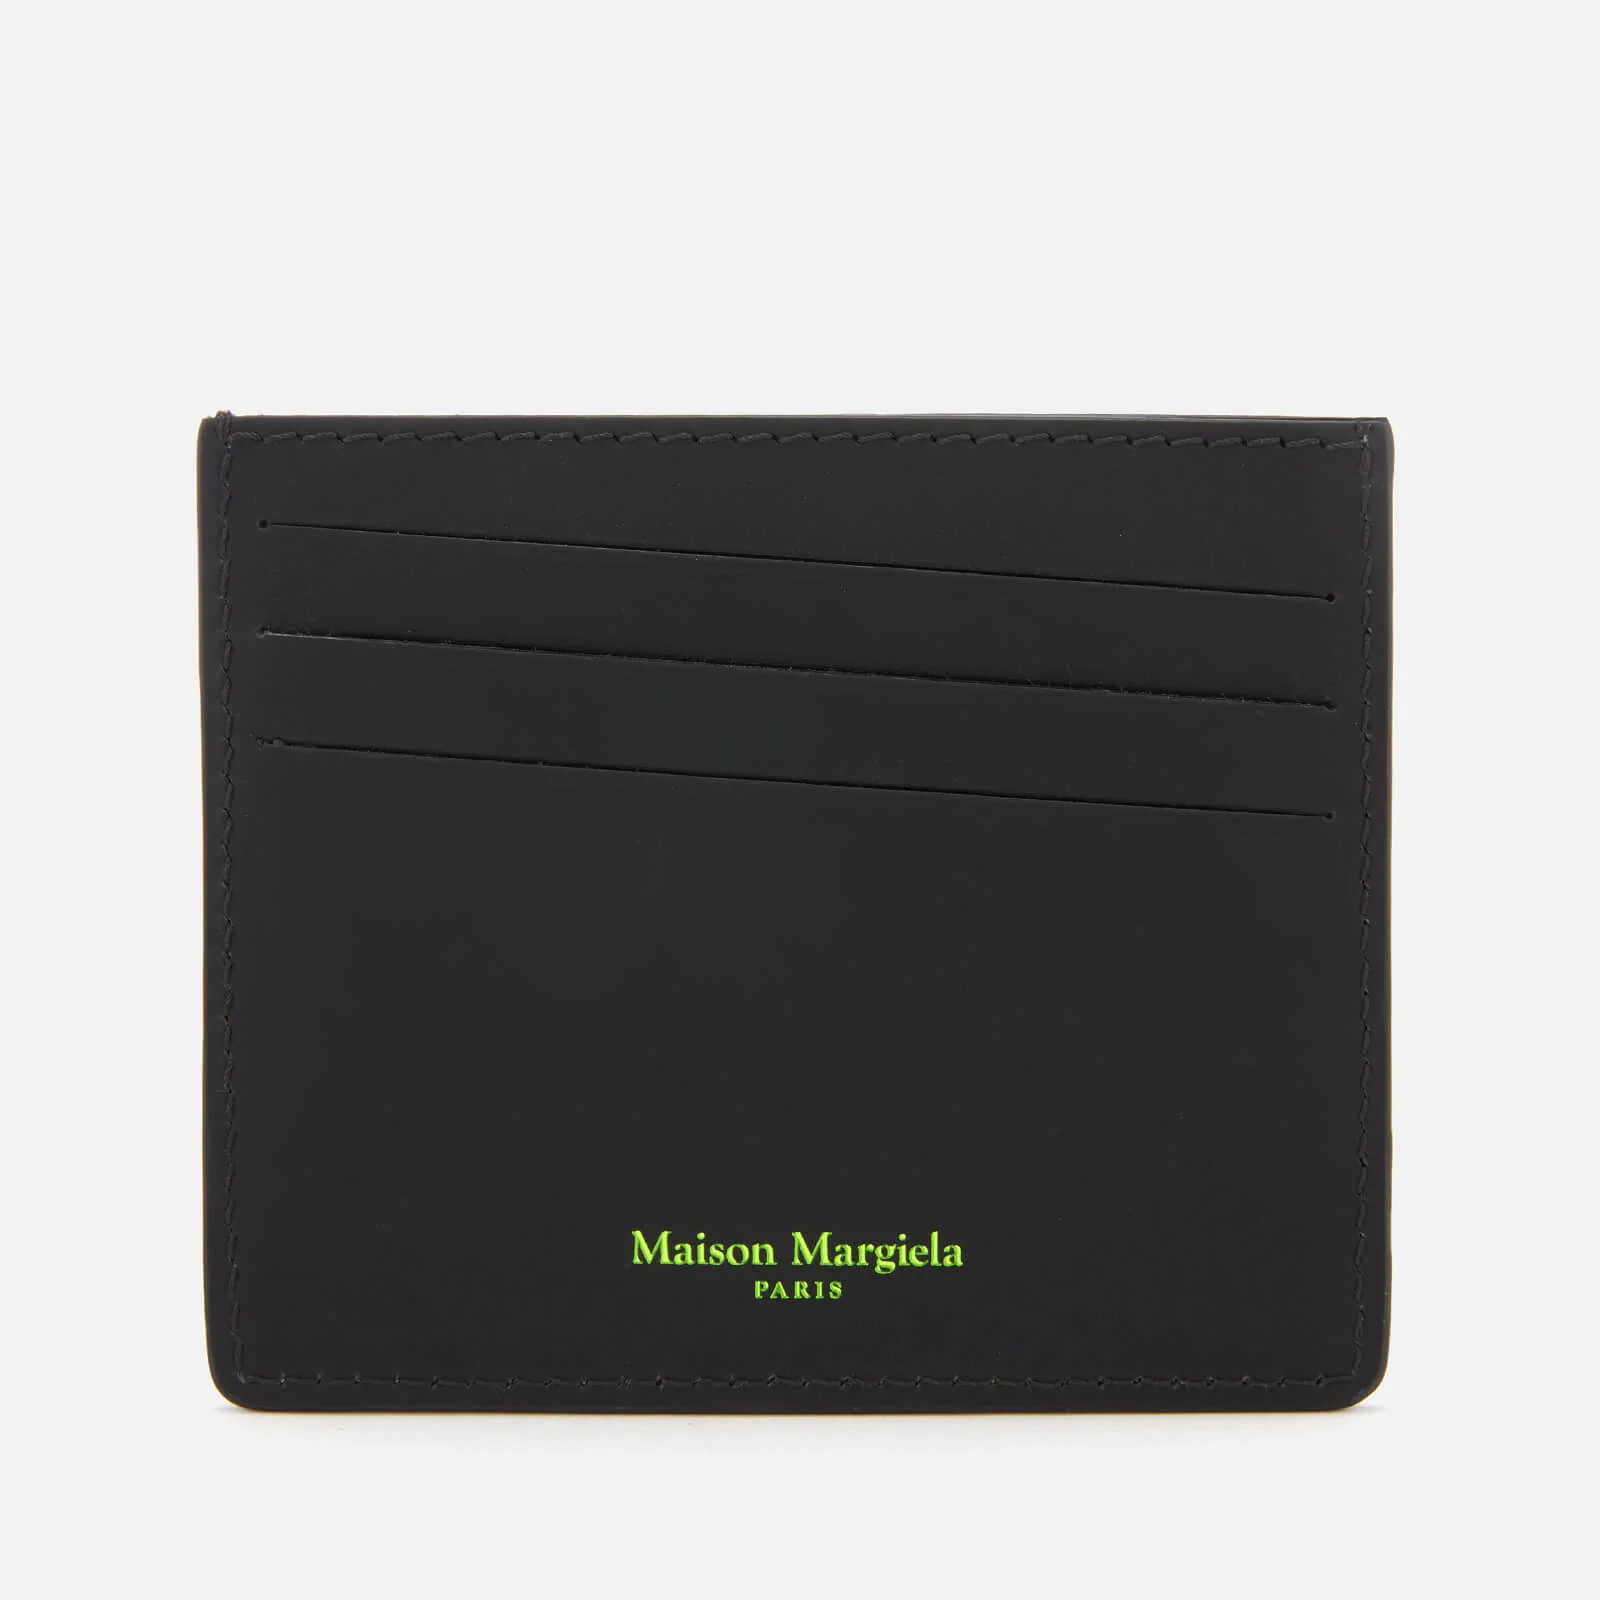 Maison Margiela Men's Snakeskin Card Holder - Roccia/Giallo Fluo Image 1